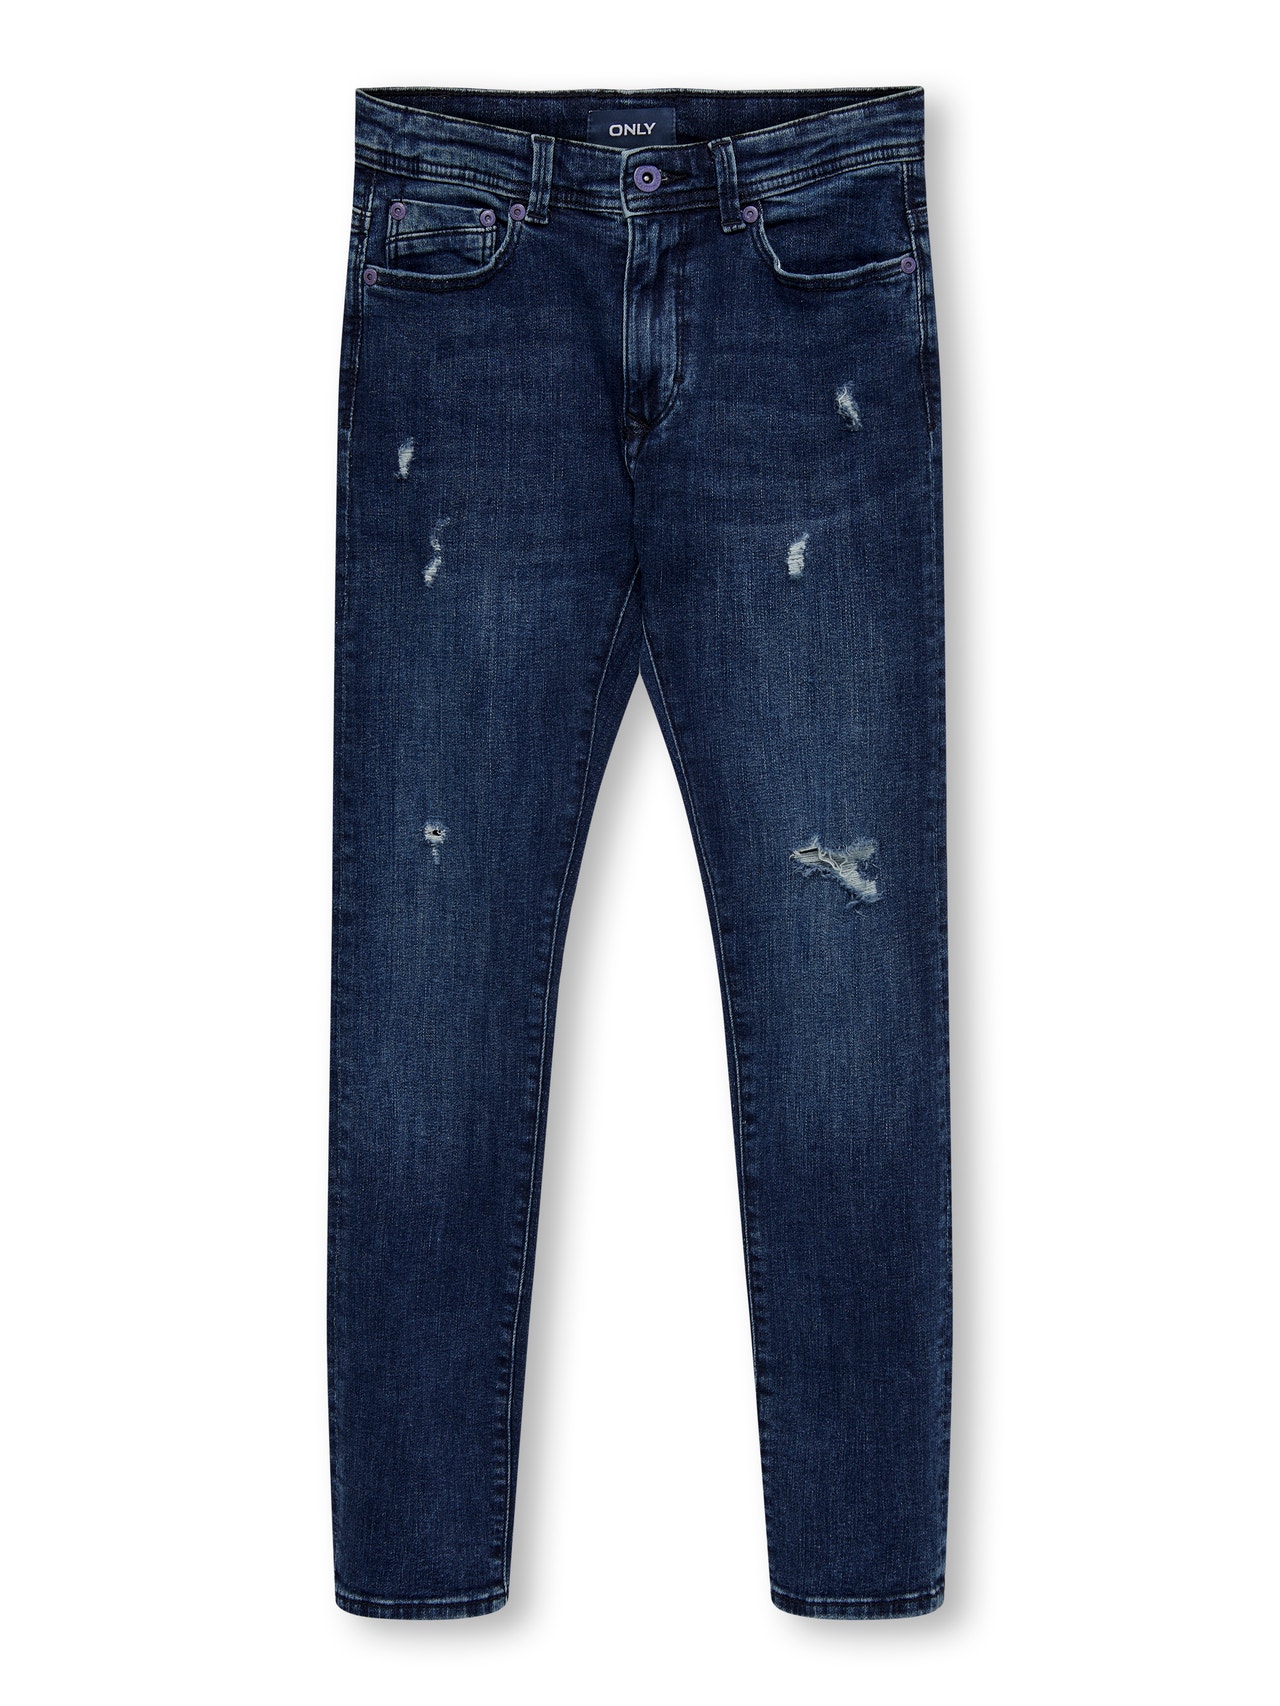 ONLY Jeans Tapered Fit -Blue Black Denim - 15272349